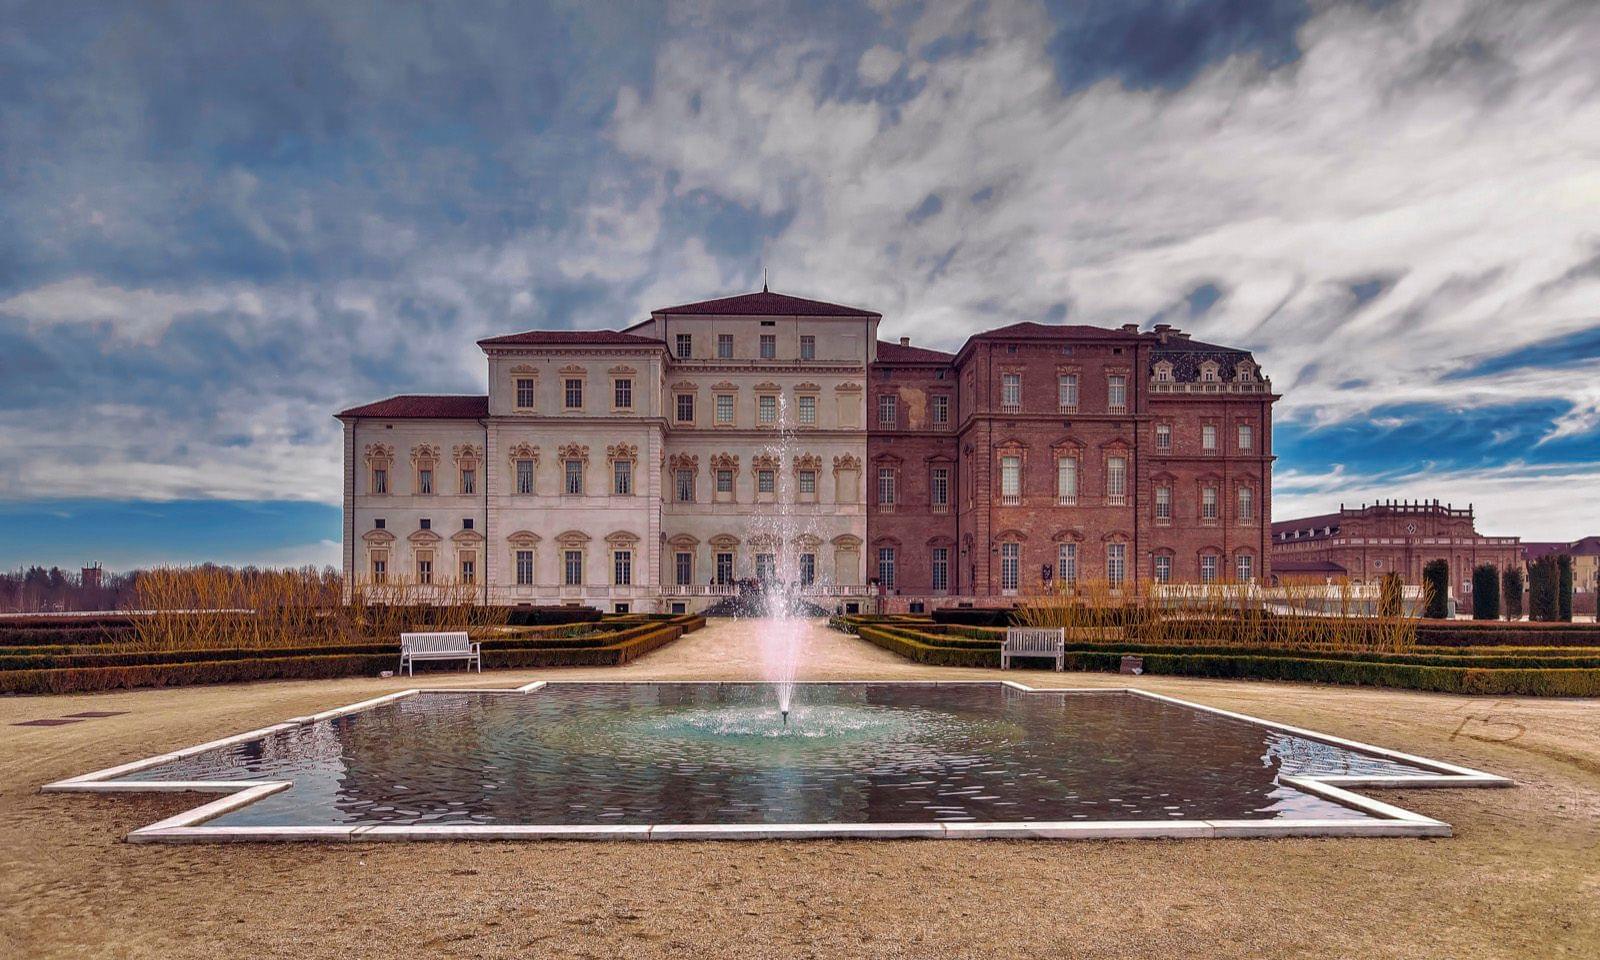 The Royal Palace - Venaria Reale - Piemonte - Italy